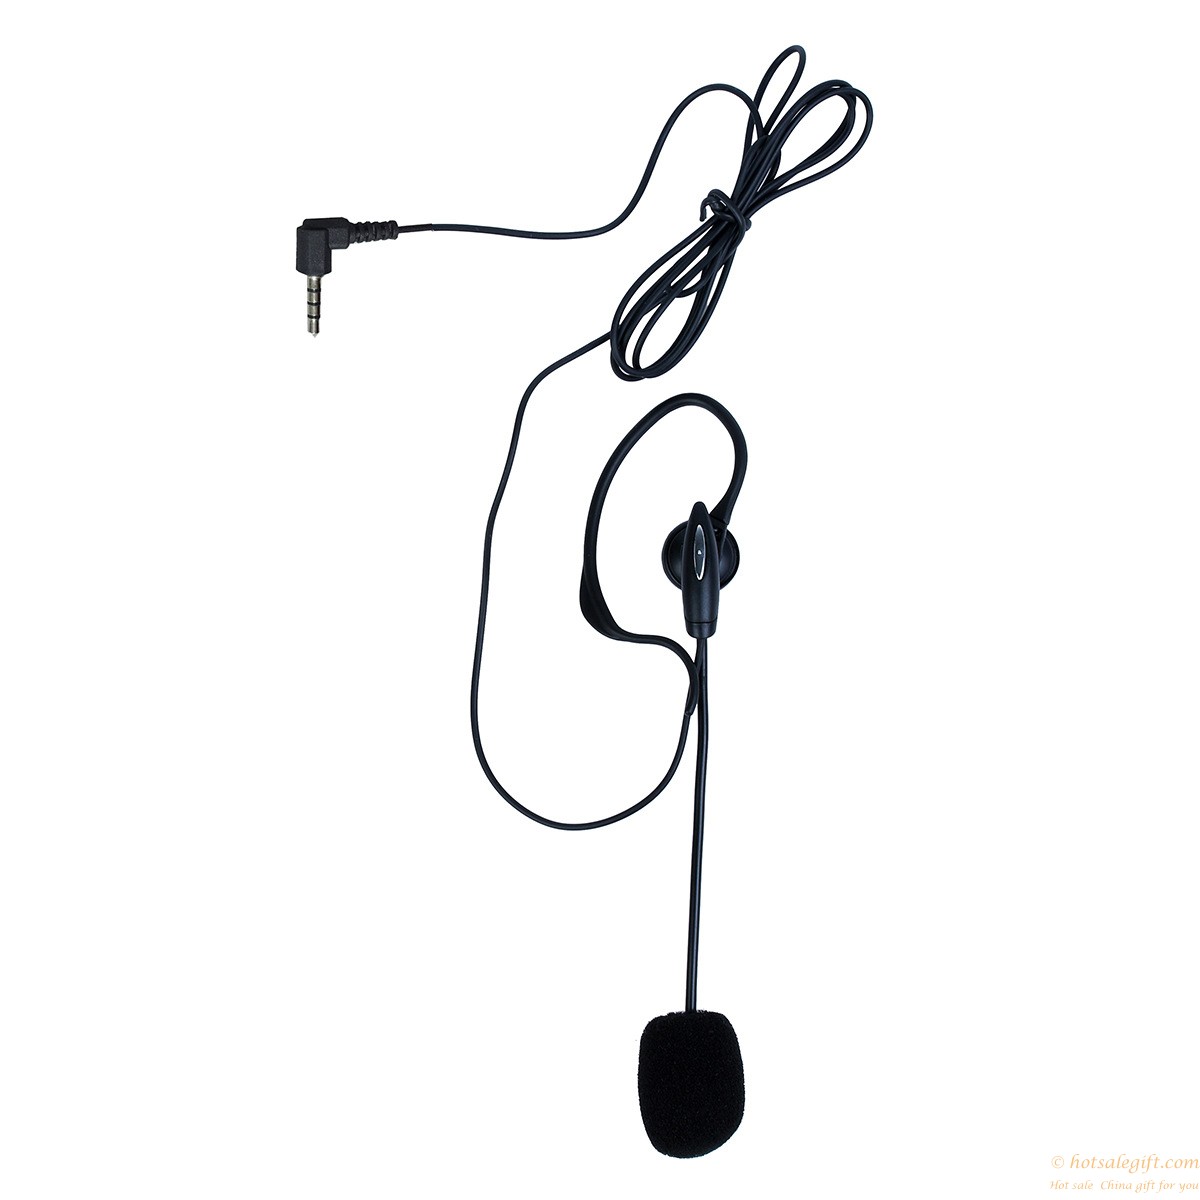 hotsalegift 1200m fullduplex bluetooth interphone intercom handsfree stereo headset 3